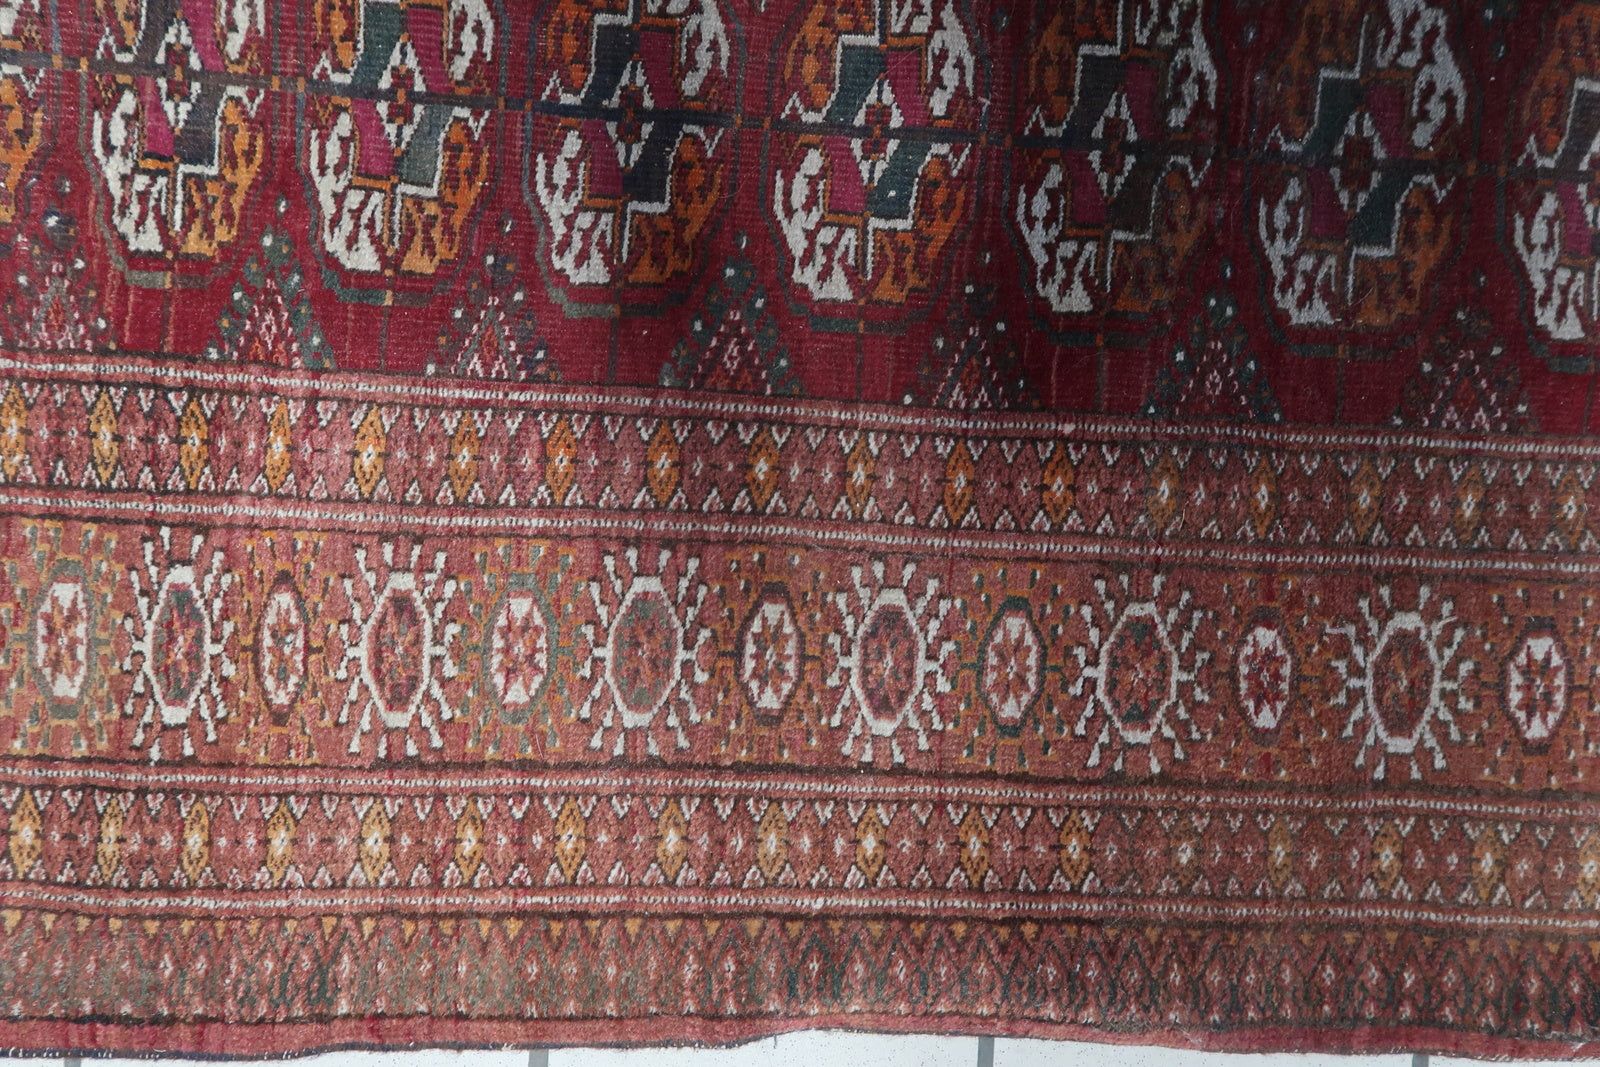 Intricate weaving and craftsmanship on the Handmade Vintage Uzbek Bukhara Rug